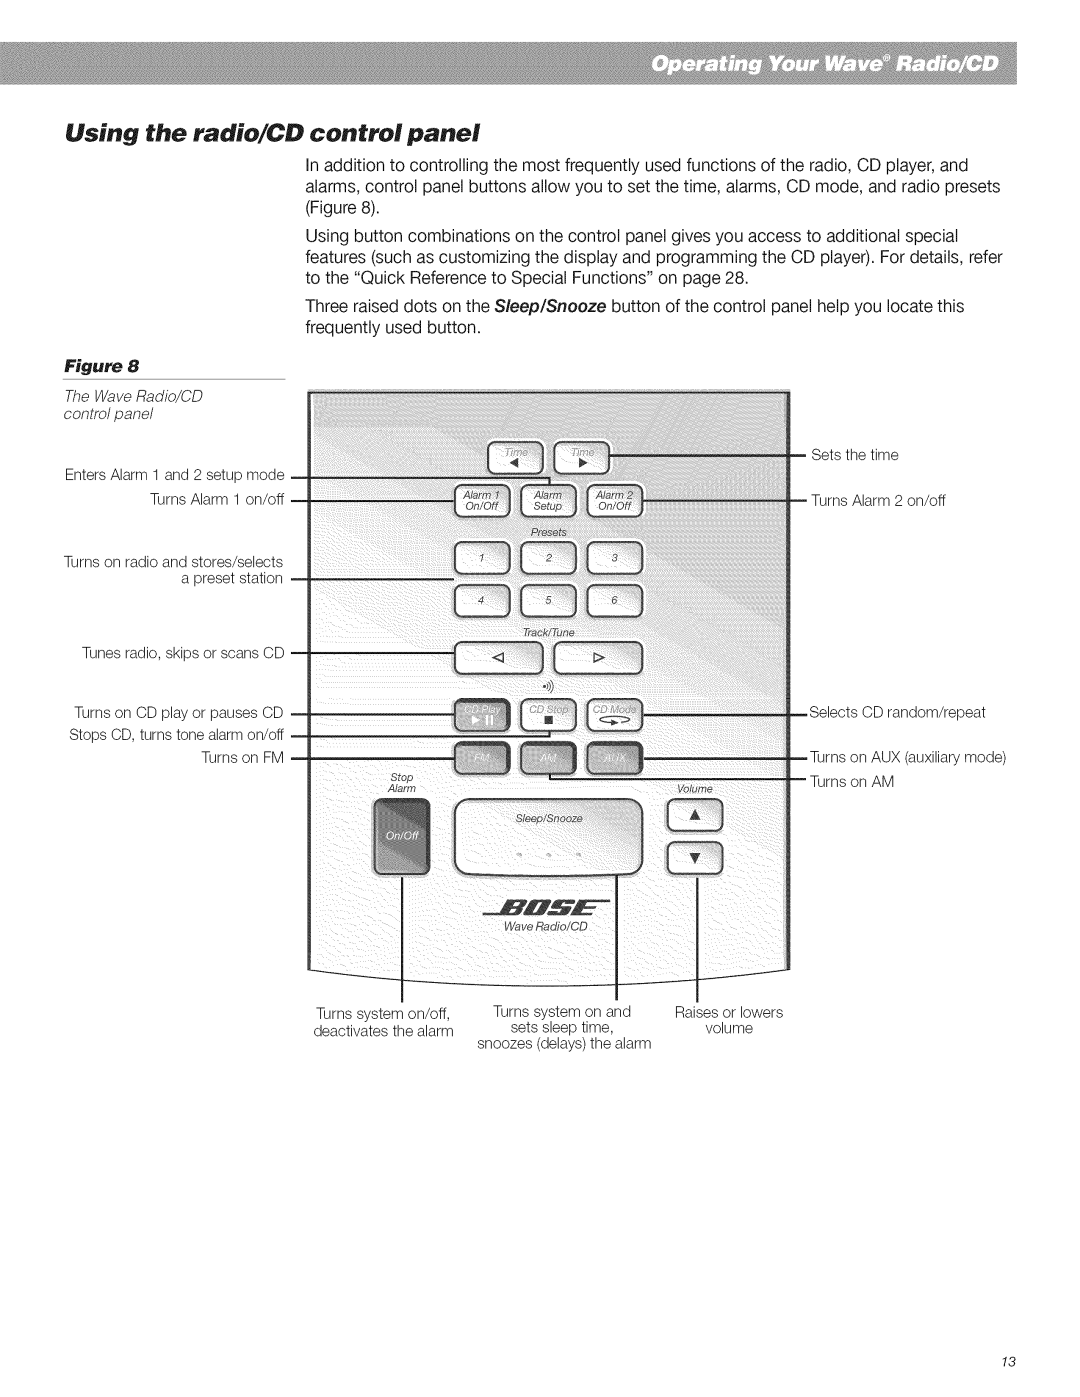 Bose CD Player manual Using the radio/CD control panel, Figure, The Wave Radio/CD control panel 